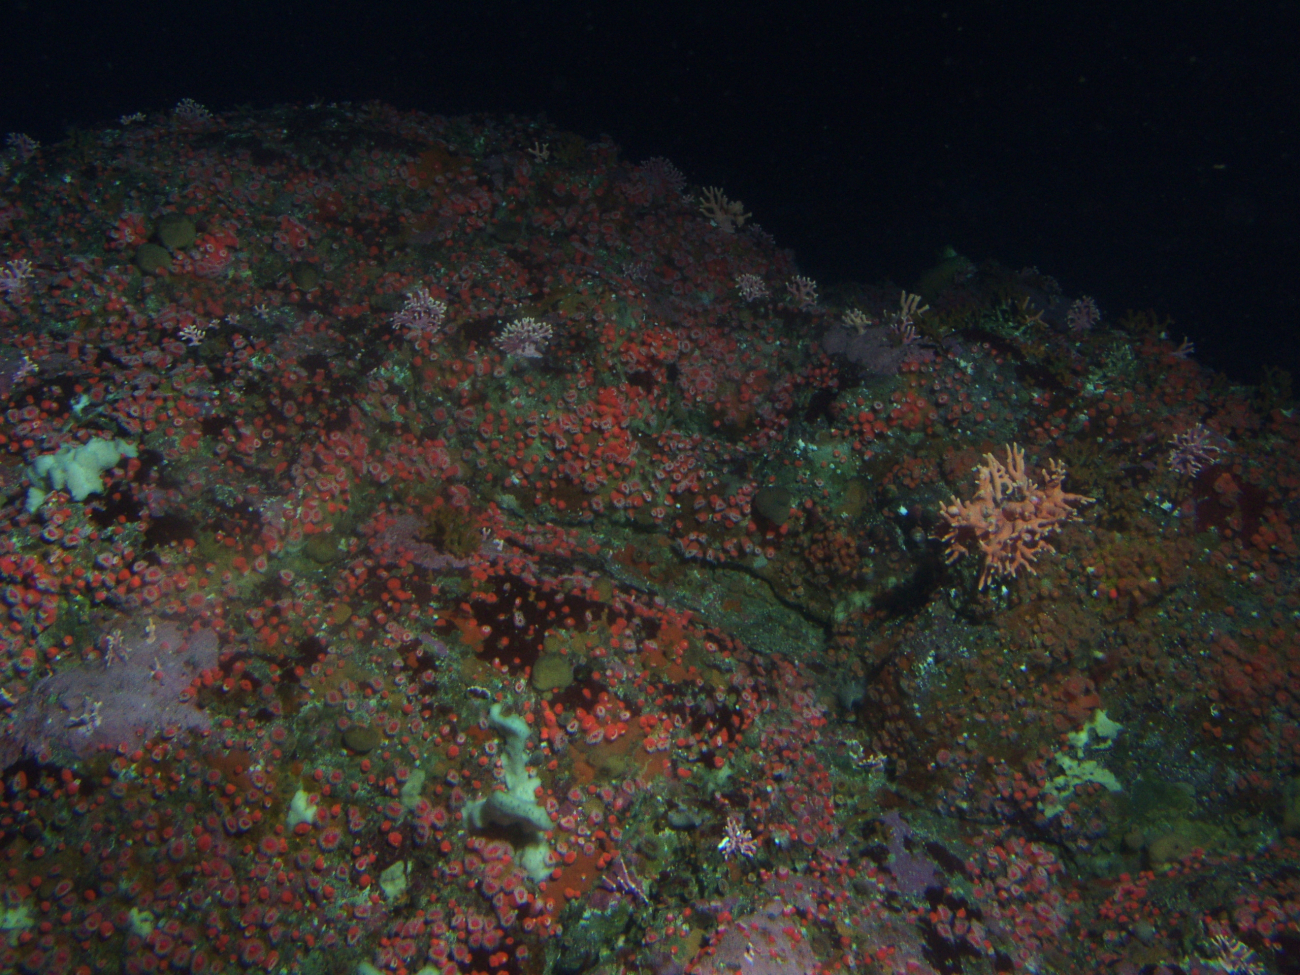 Invertebrates in rocky reef habitatat 90 meters depth